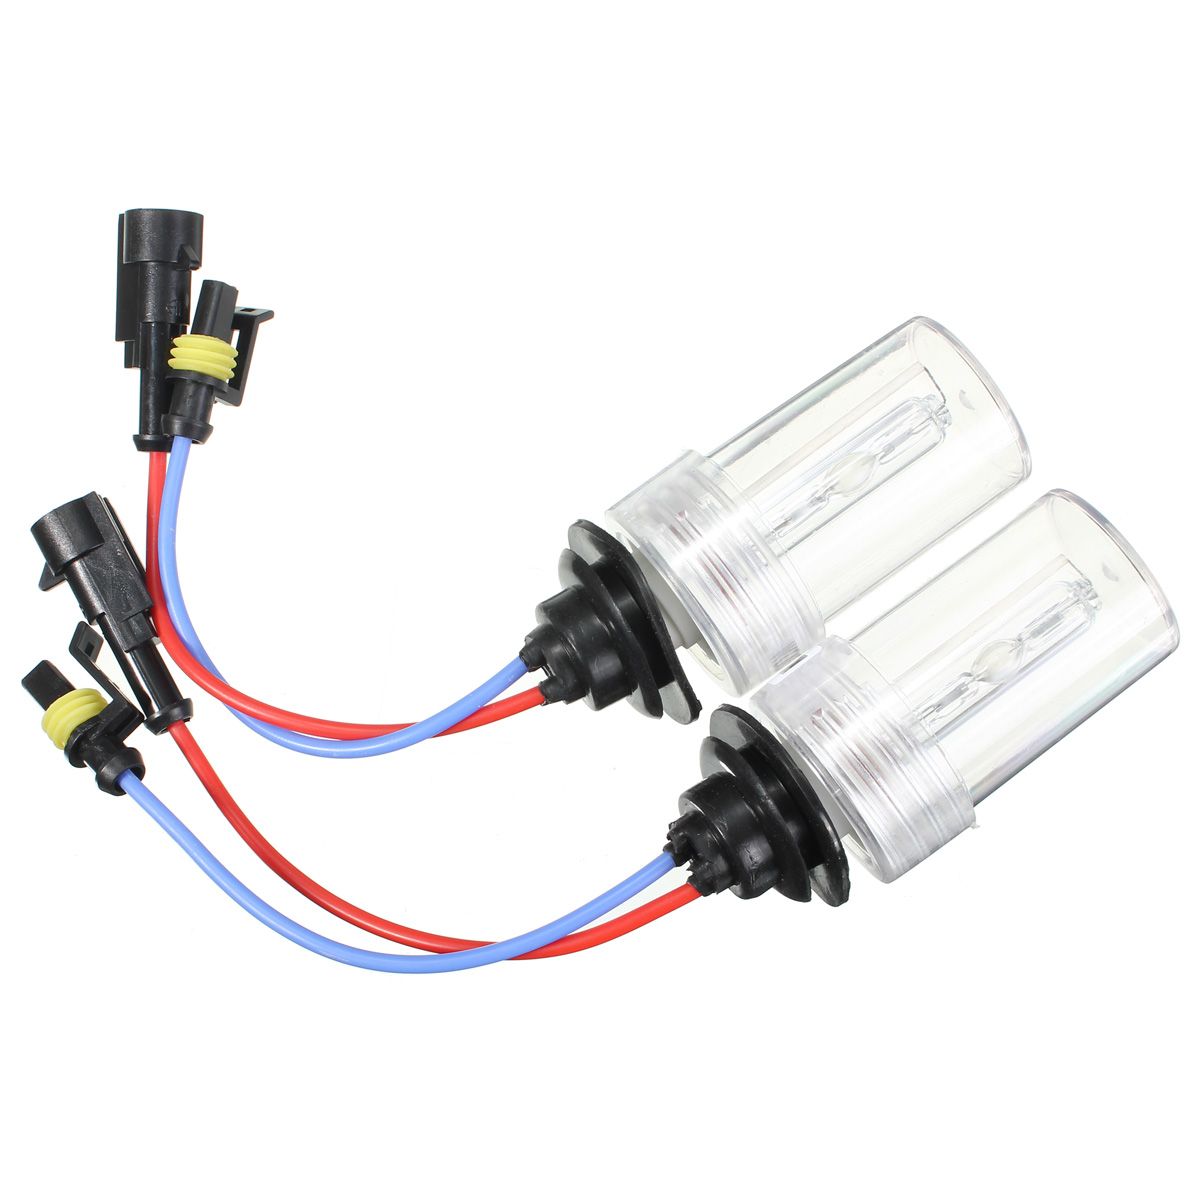 2Pcs-100W-H1-Car-Xenon-Headlights-Bulbs-HID-Lamp-Kit-with-Ballast-4300K-12000K-DC-12V-1001762